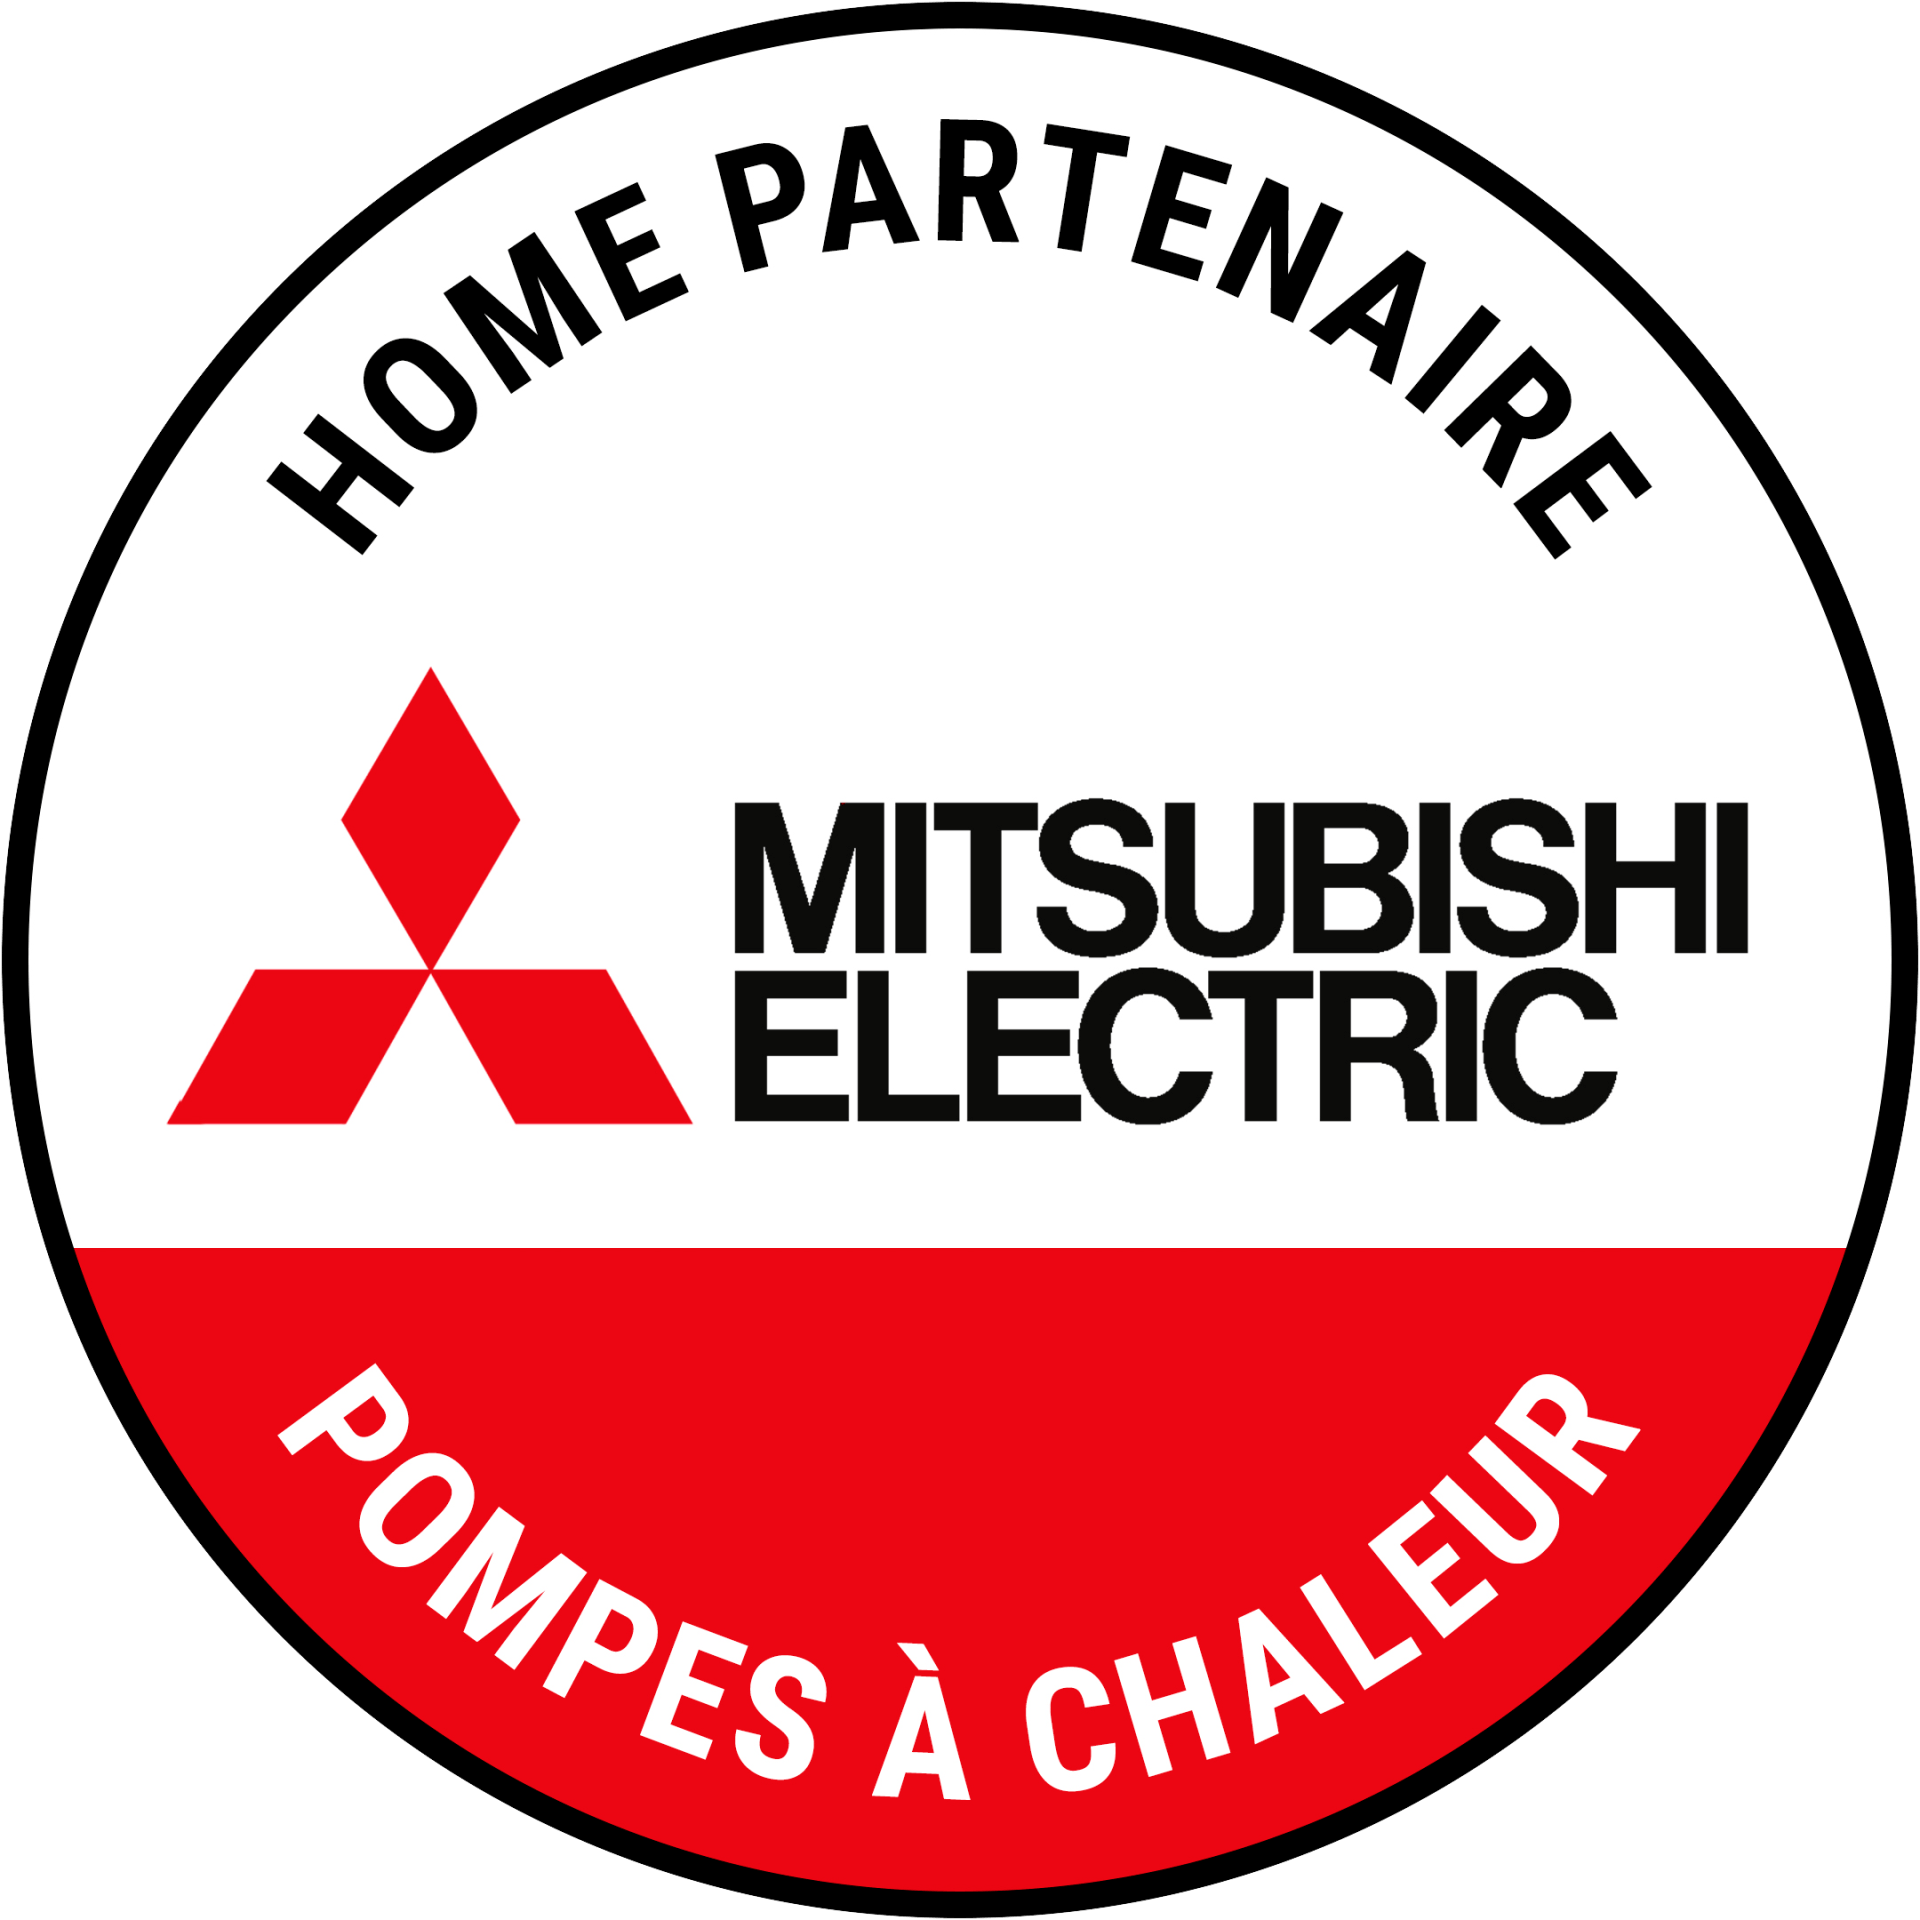 Logo-Mitsubishi-Electric-Home-Partenaire